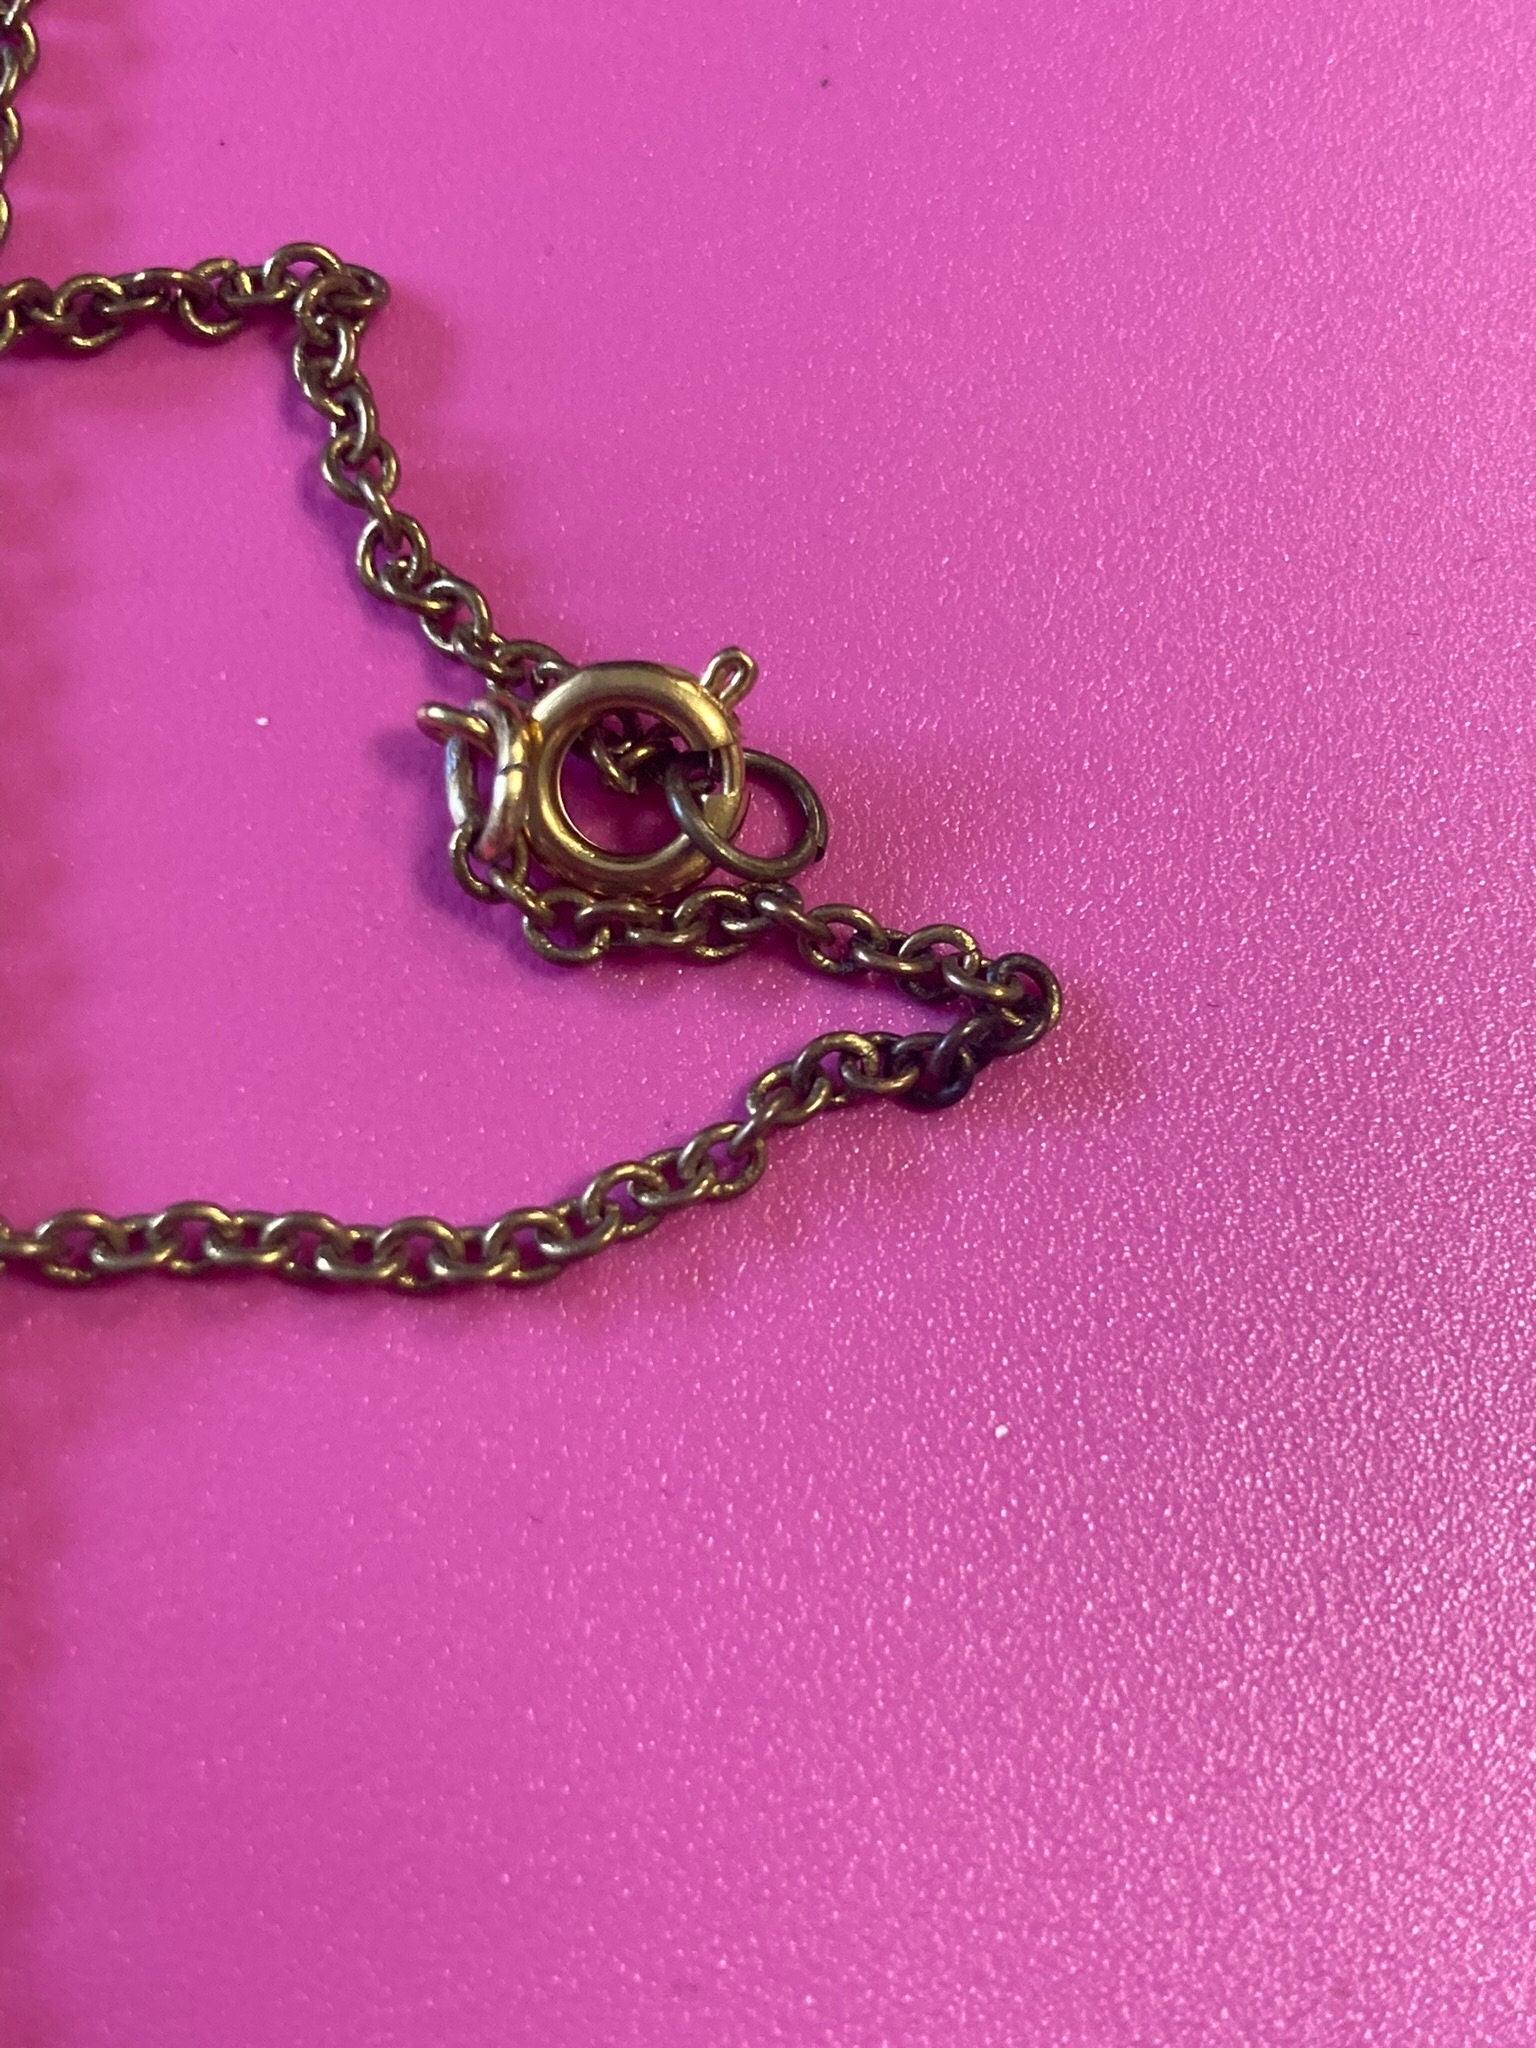 Vintage copper gold tone drop necklace with turquoise paste floral pendant chain